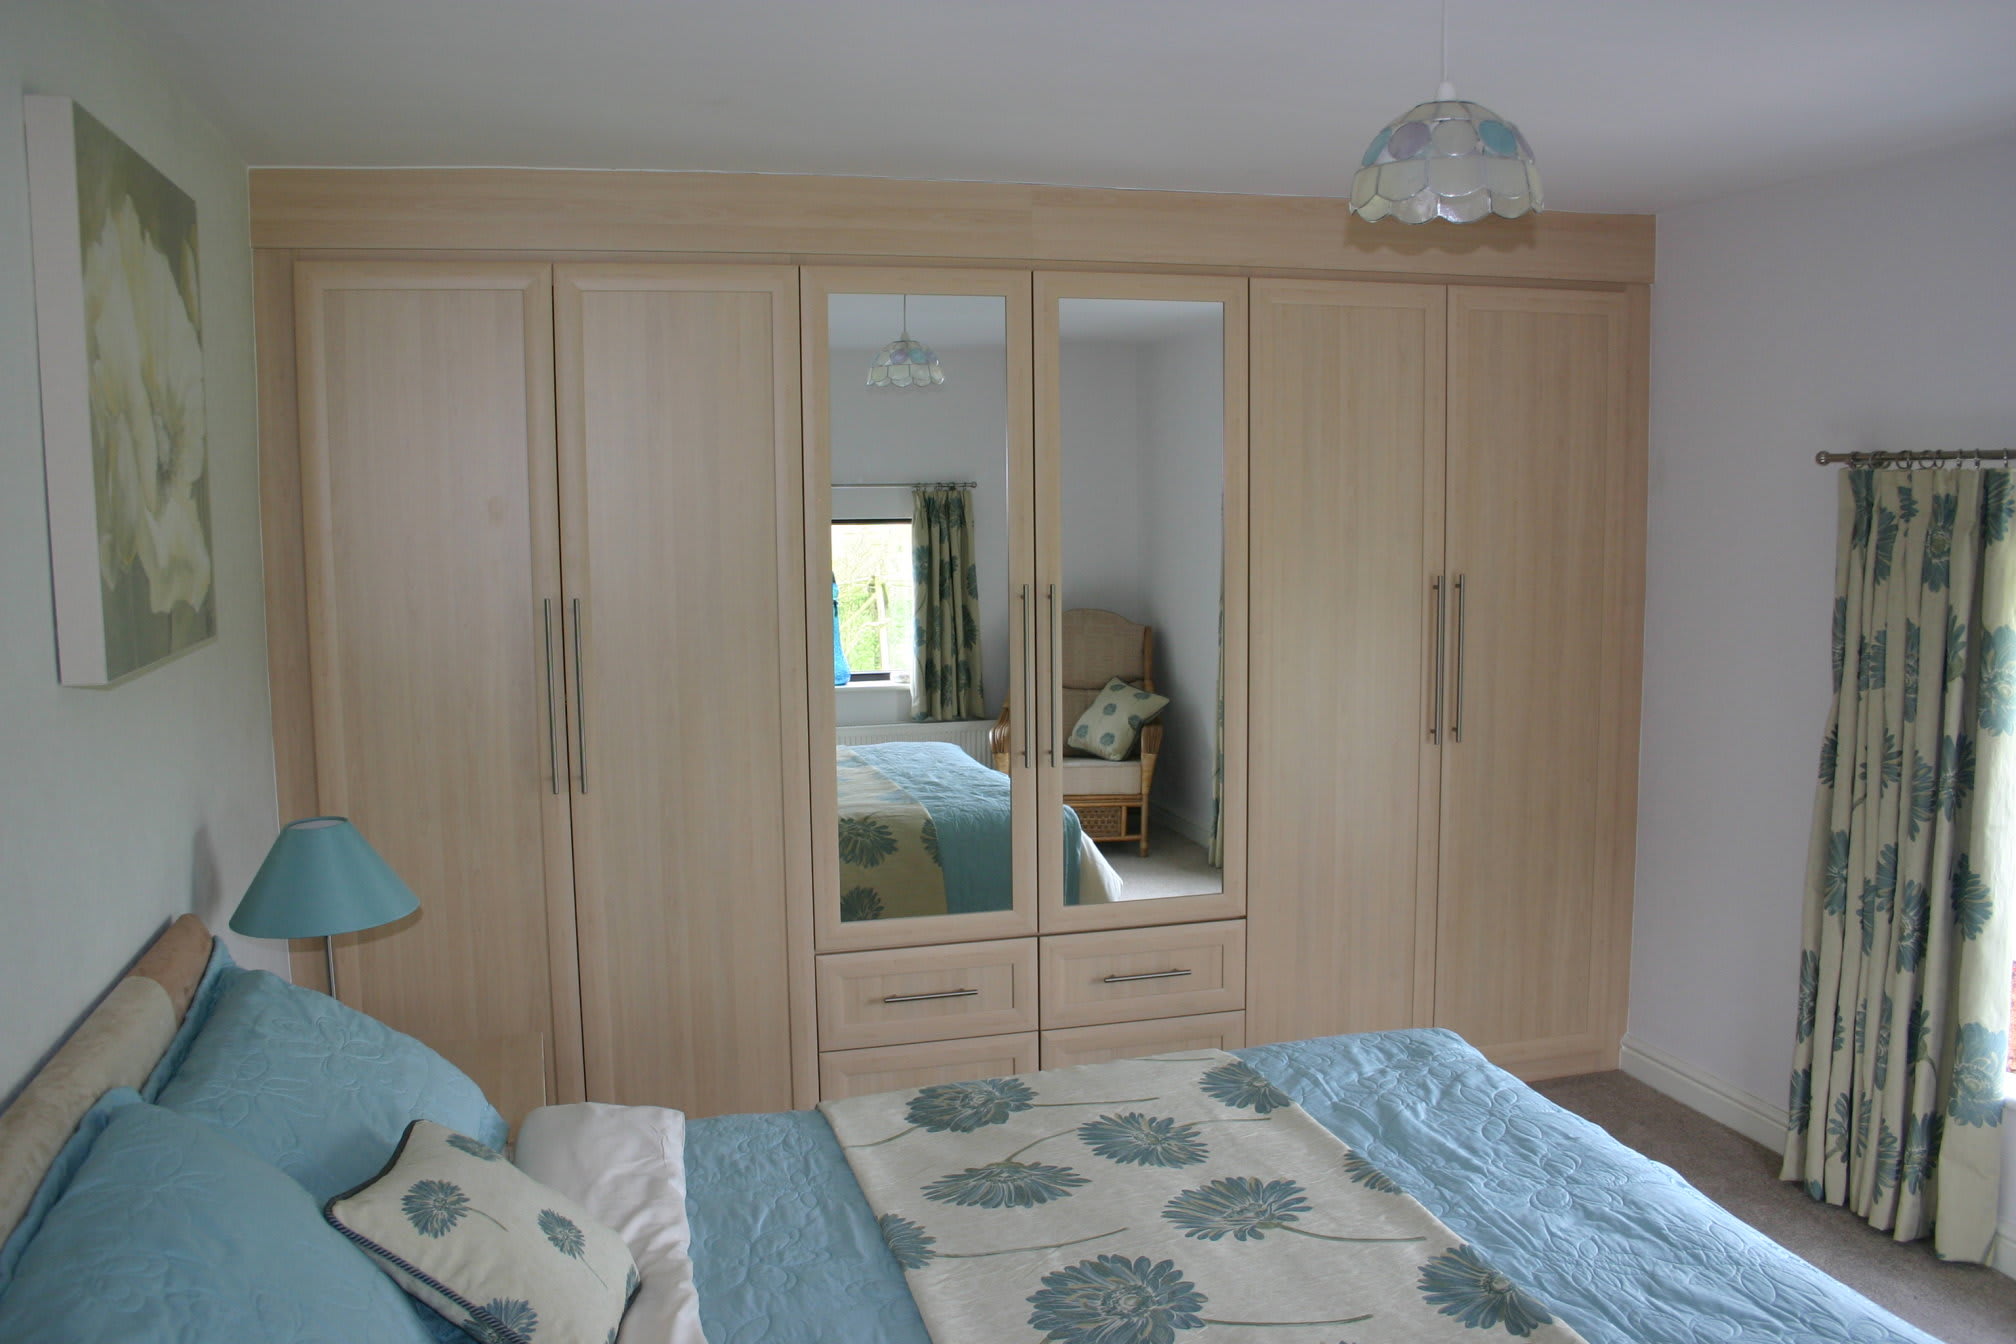 Images Lancashire Bedrooms